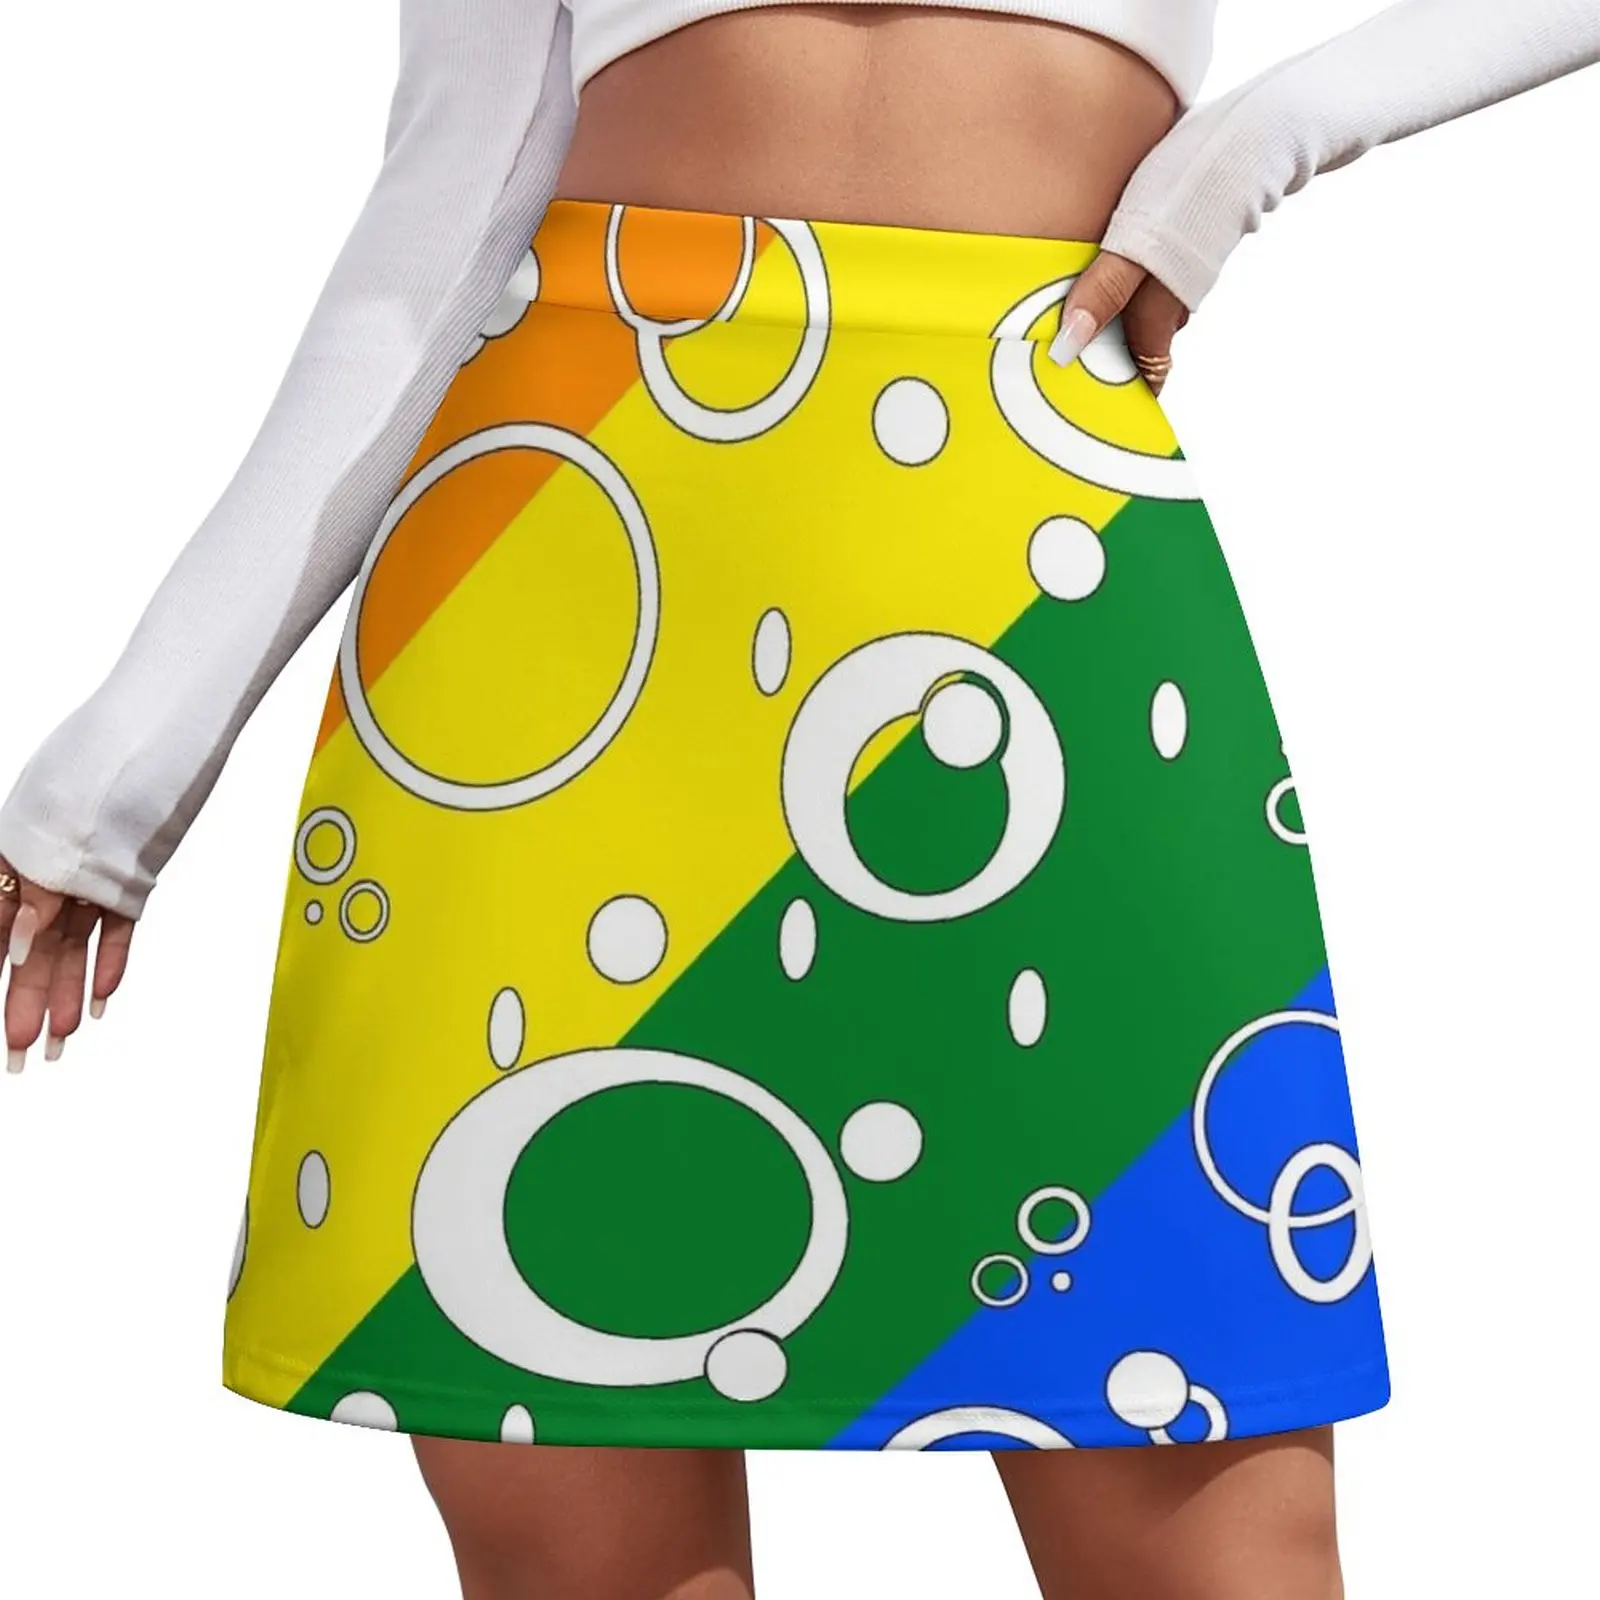 Retro Futuristic Loops, Rainbow Pride Flag, White Loops Mini Skirt Evening dresses Clothing night club outfit